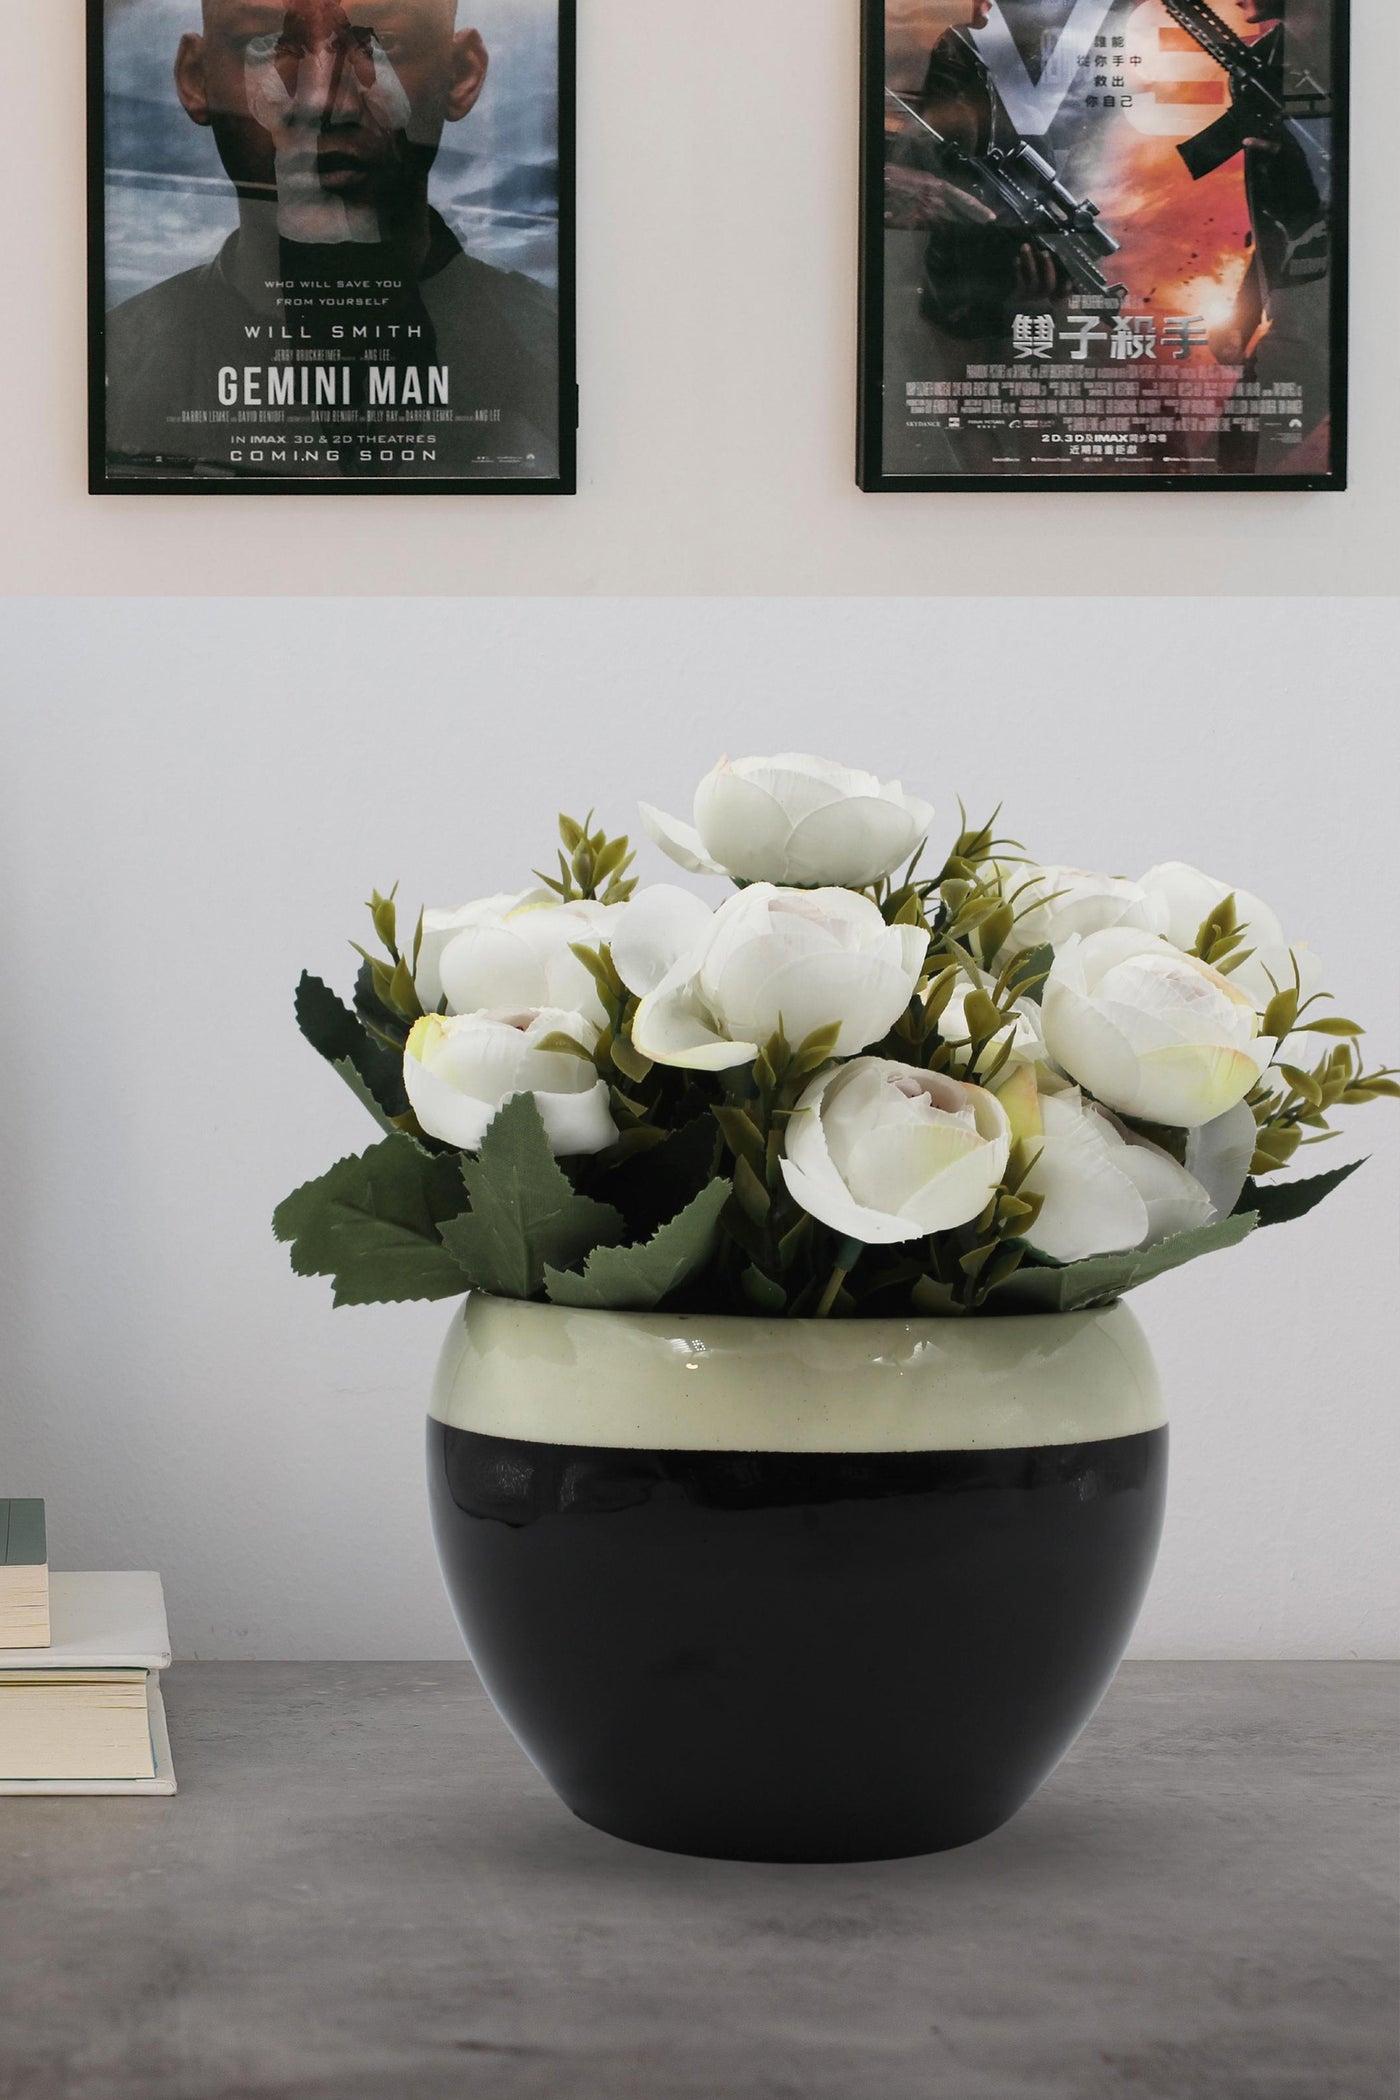 Goldie's for oldies! Artificial Flowers in Black & White Metal Vase